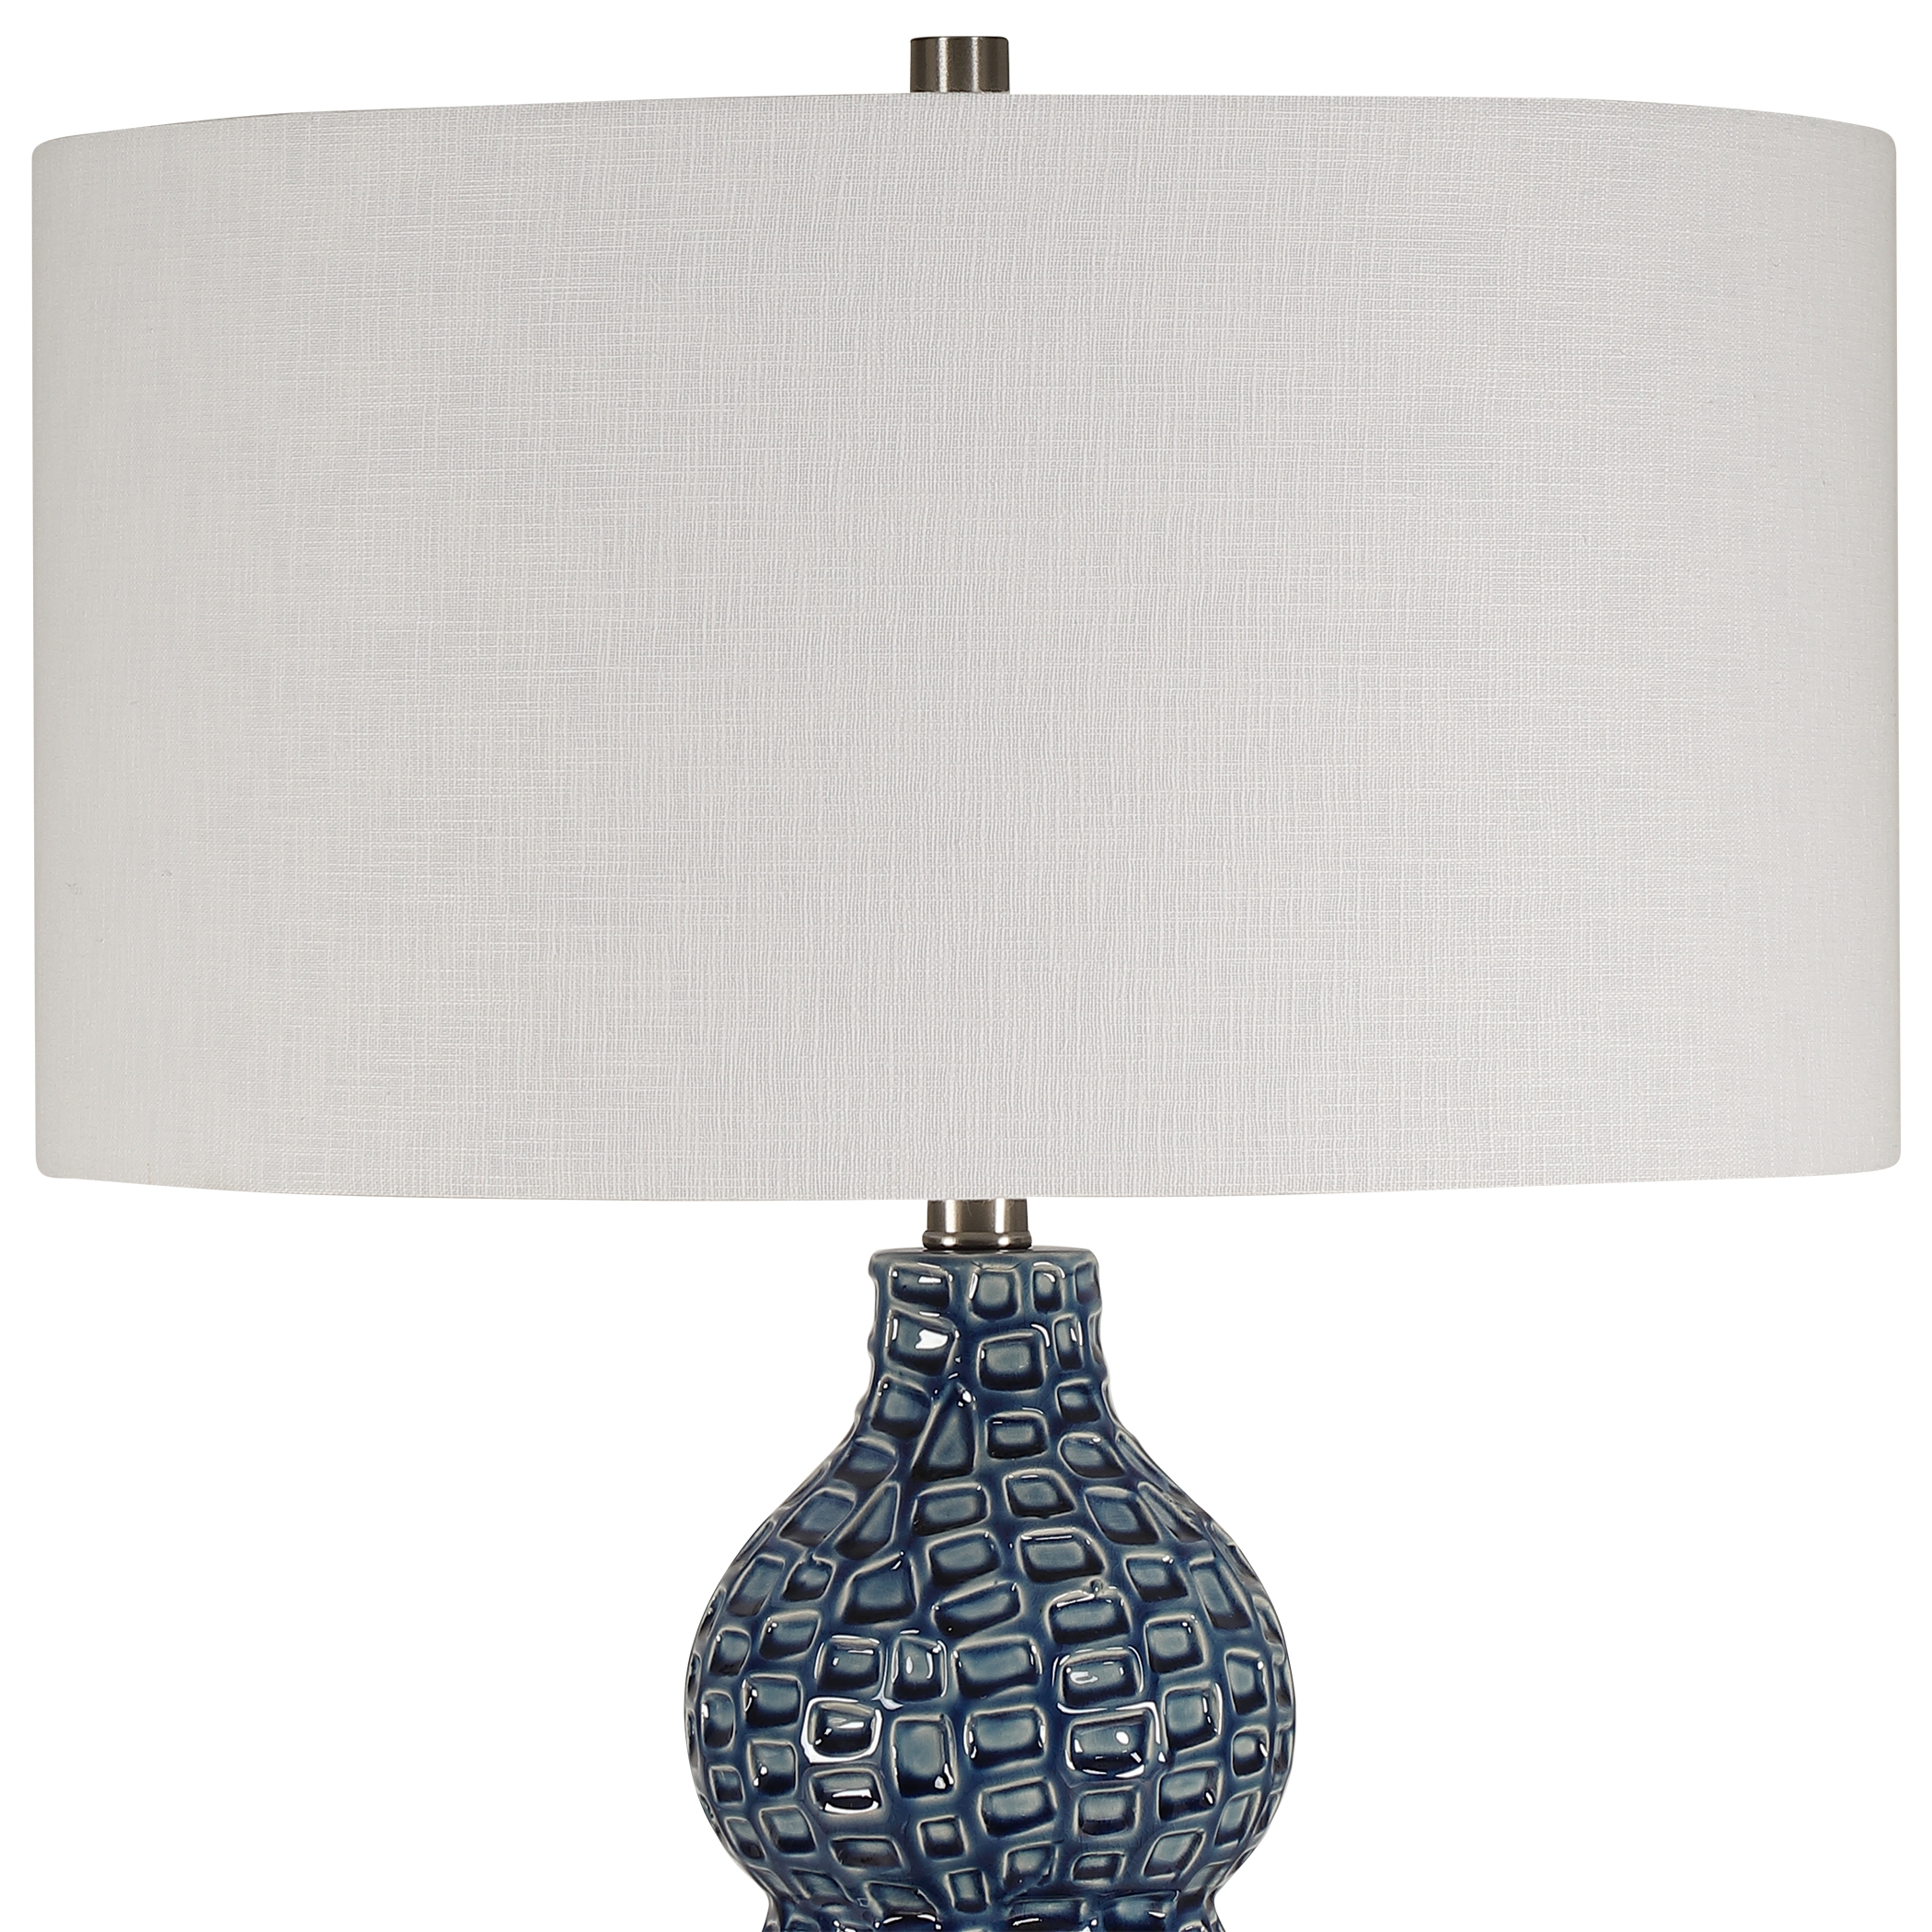 Holloway Cobalt Blue Table Lamp - Image 4